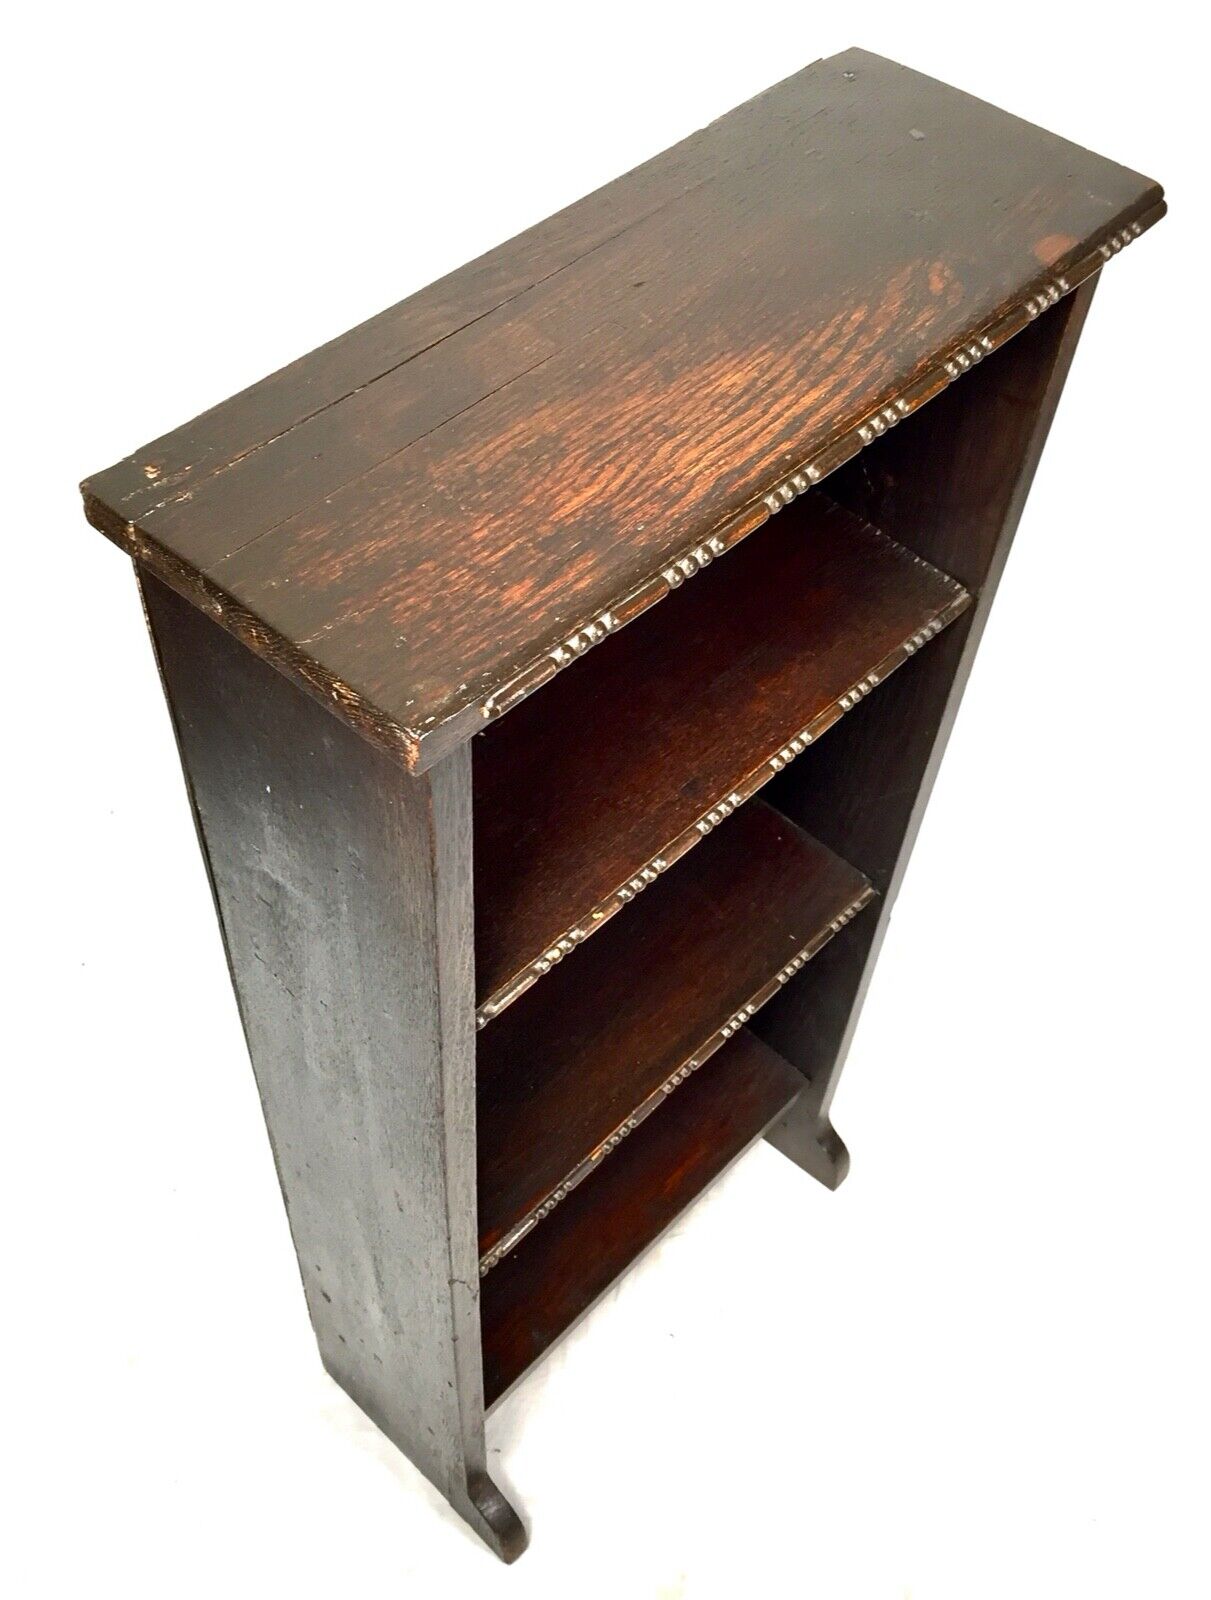 Antique Wooden Oak Bookcase Pair Book Shelf Display Rack / c.1900 Free Standing